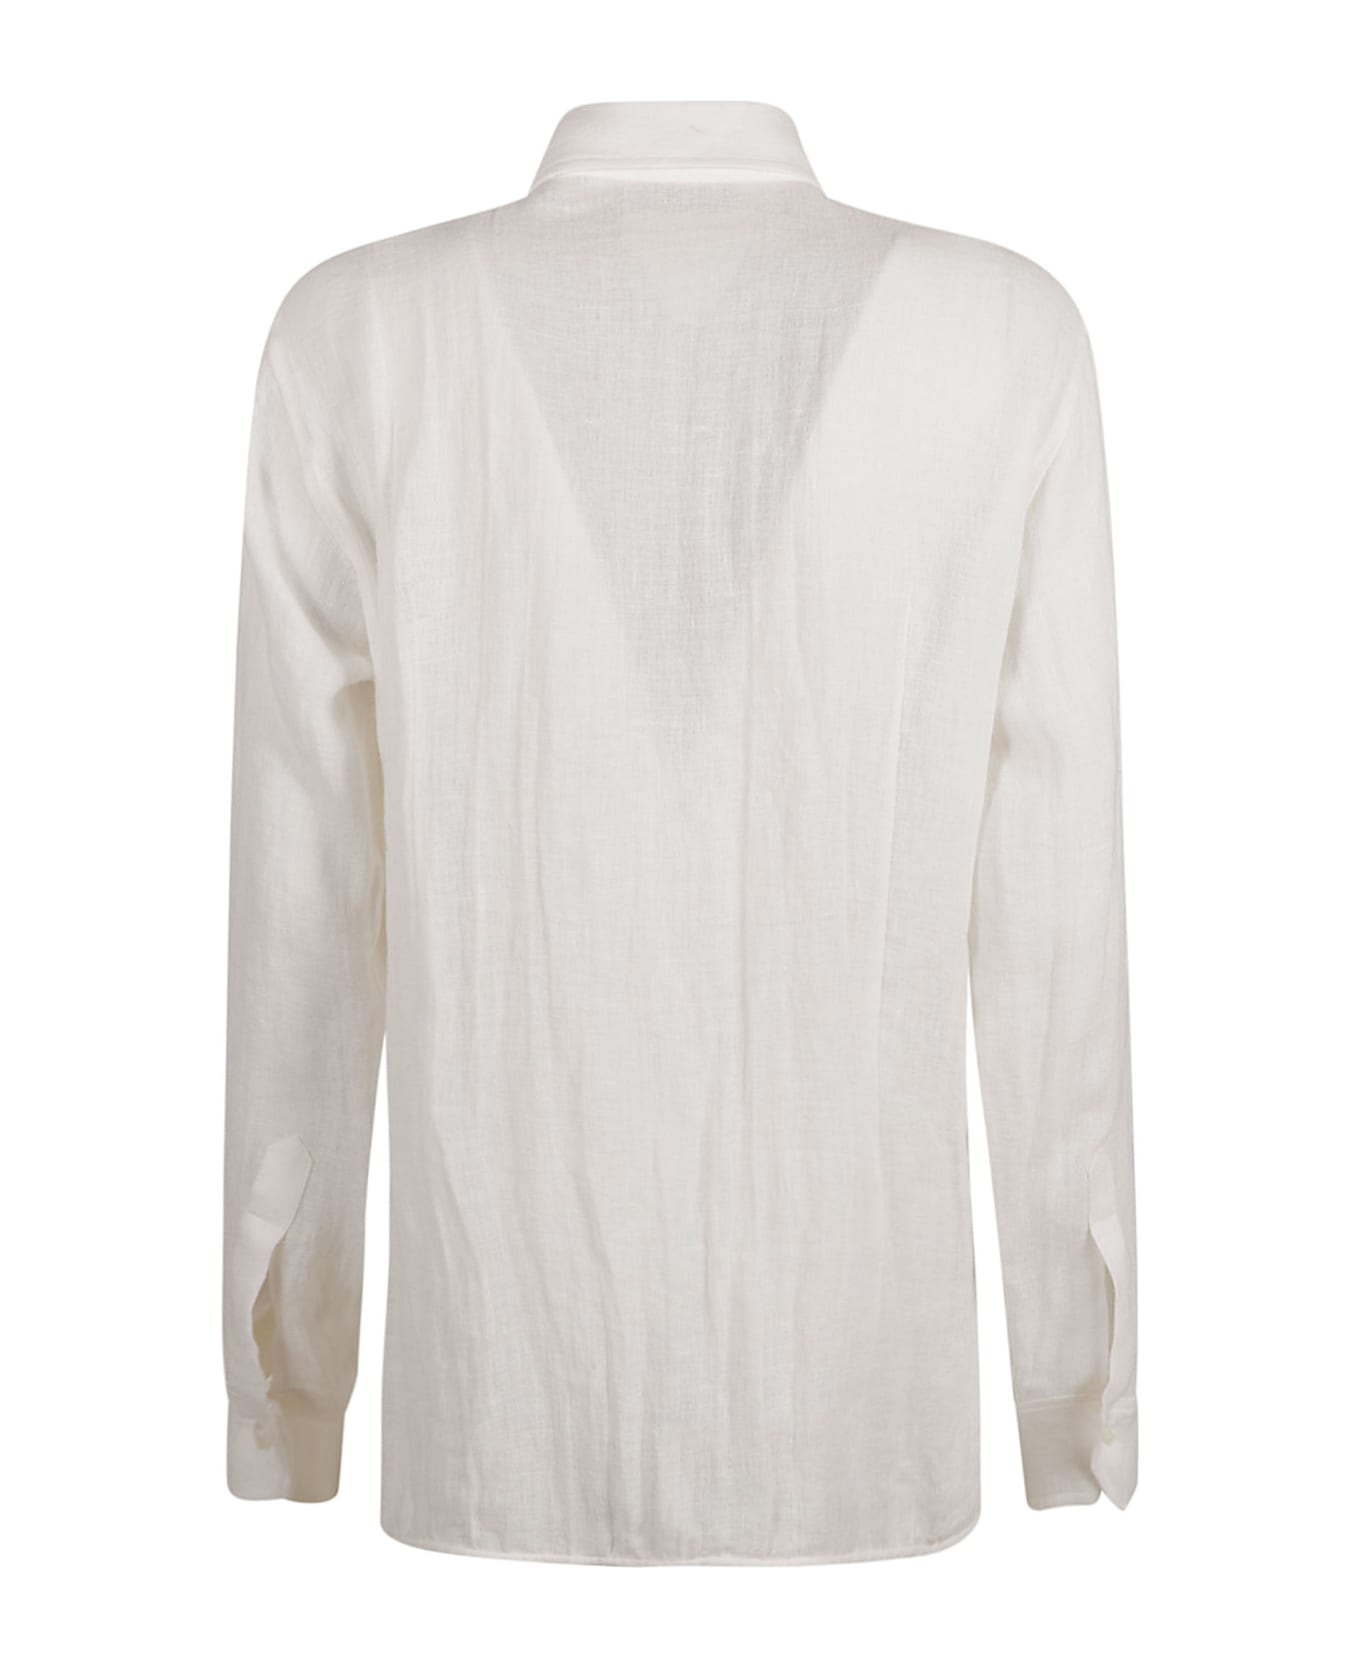 N.21 Embellished Shirt - Optic White